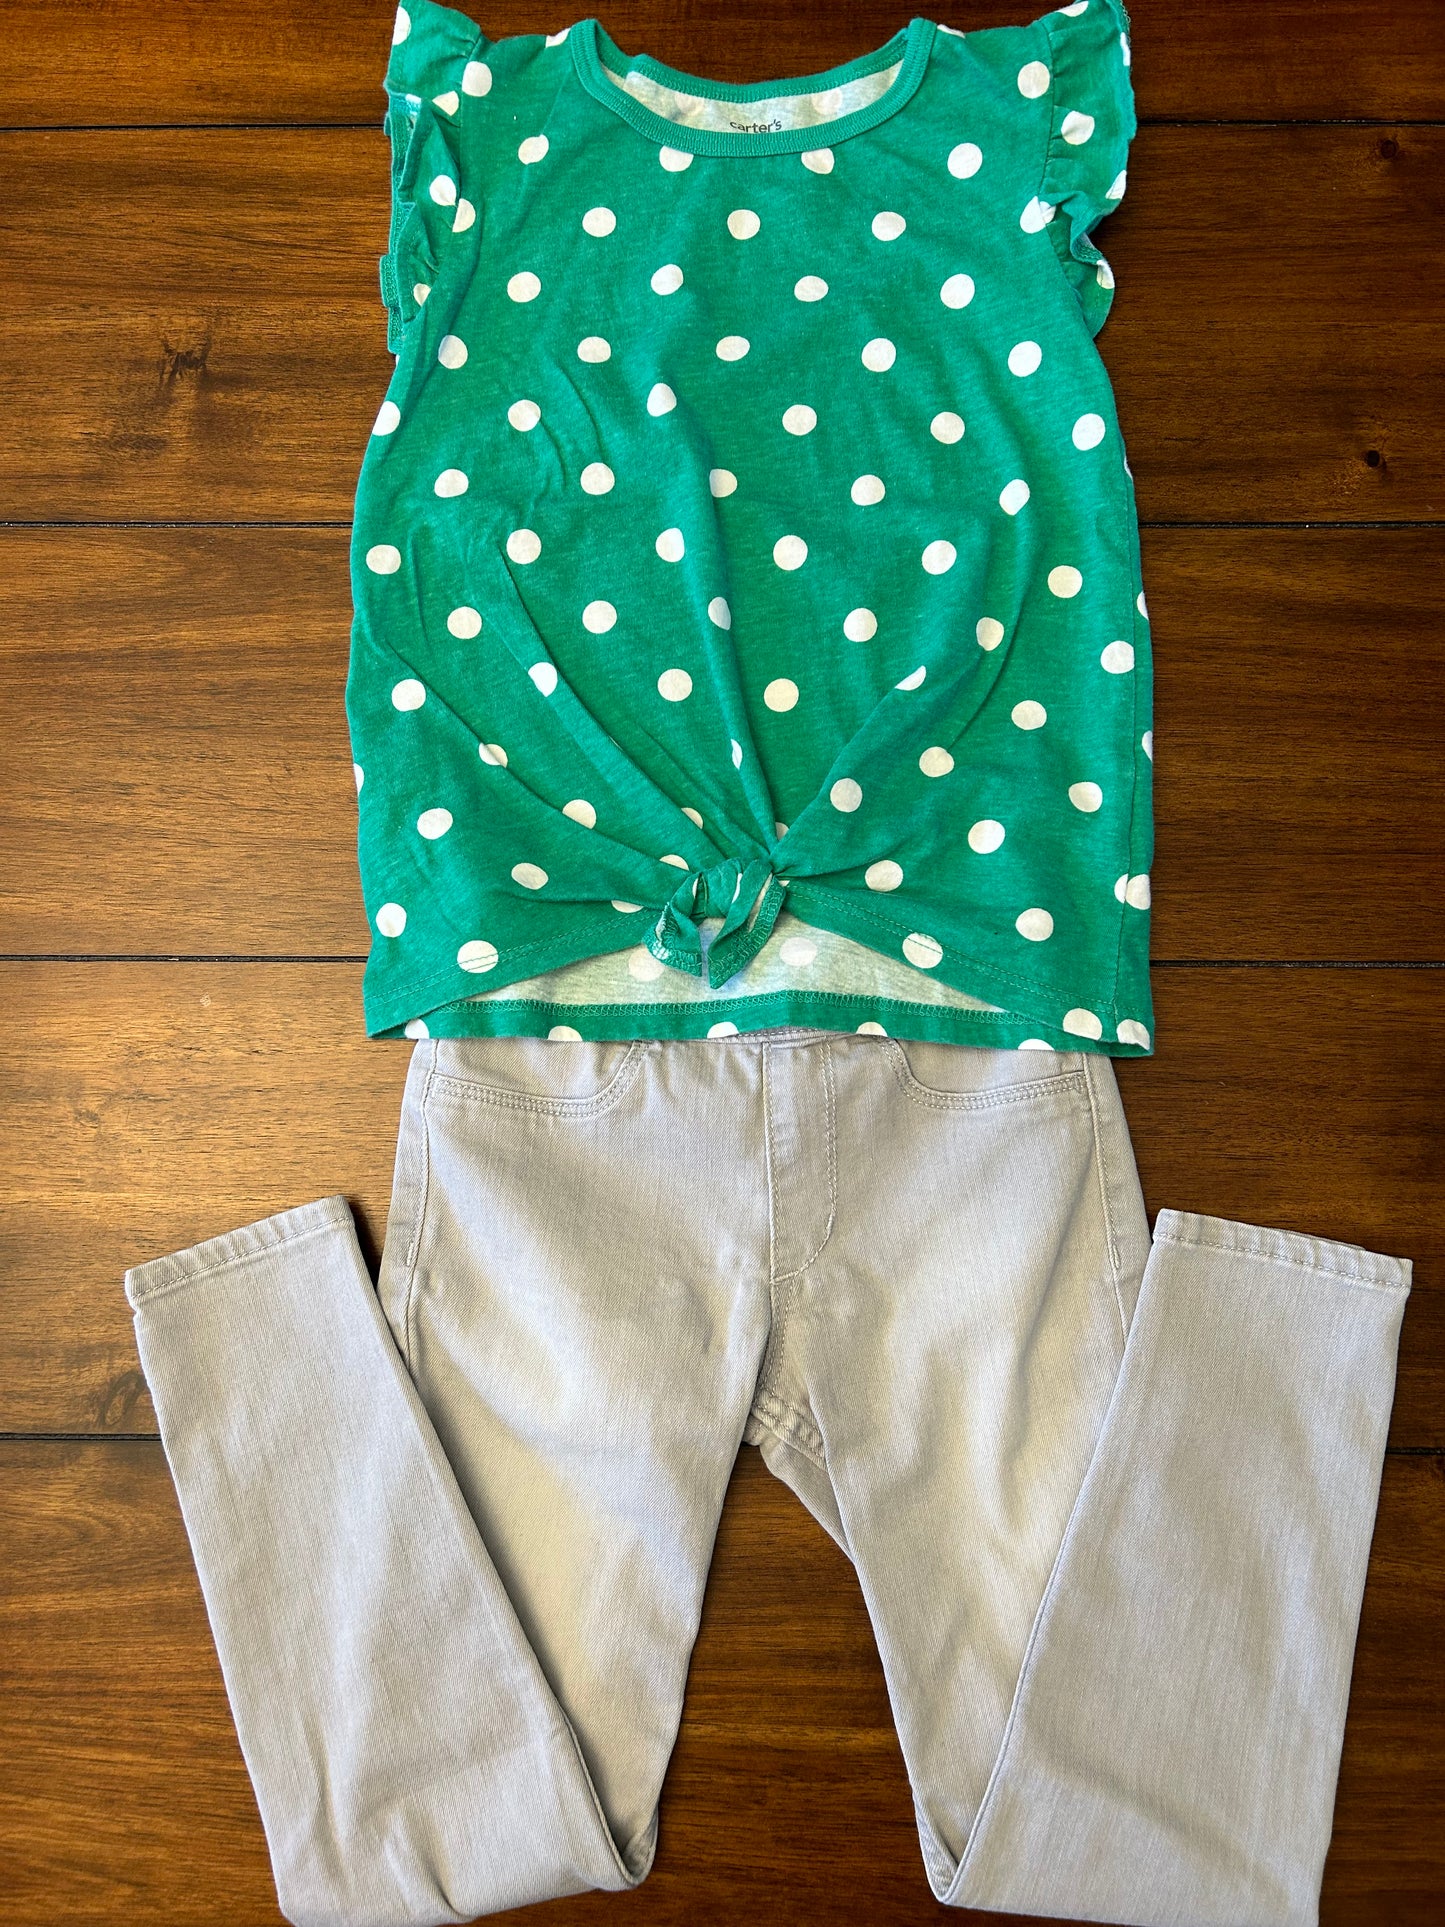 H&M Girls Light Gray Denim Jeggings  & Carter's Green with White Polka Dot Top	Size 5T PPU 45040